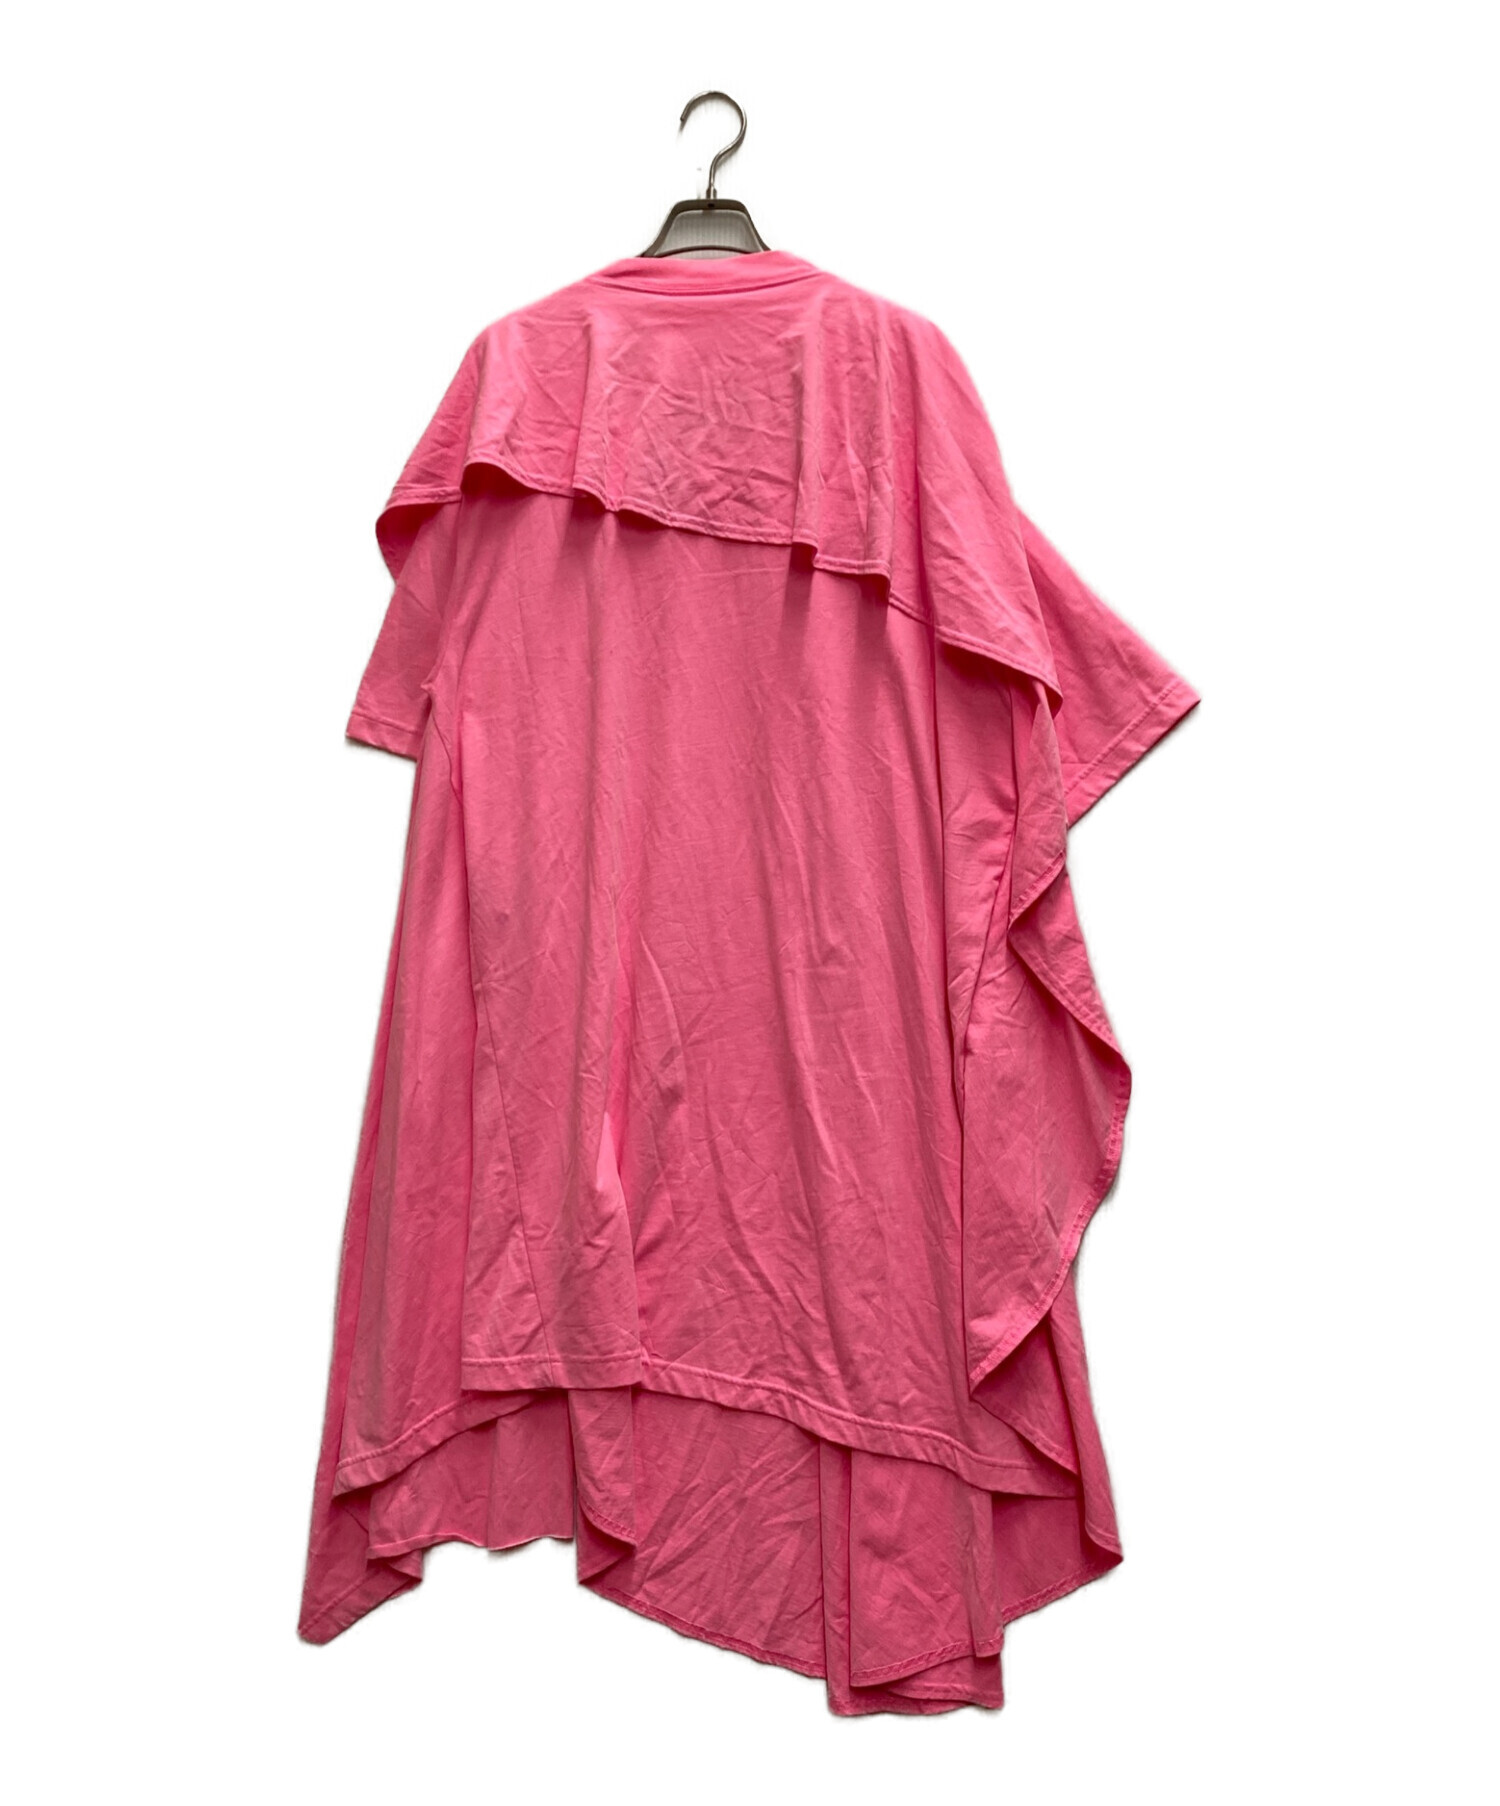 BALENCIAGA (バレンシアガ) Neon Oversize Dress ピンク サイズ:XS